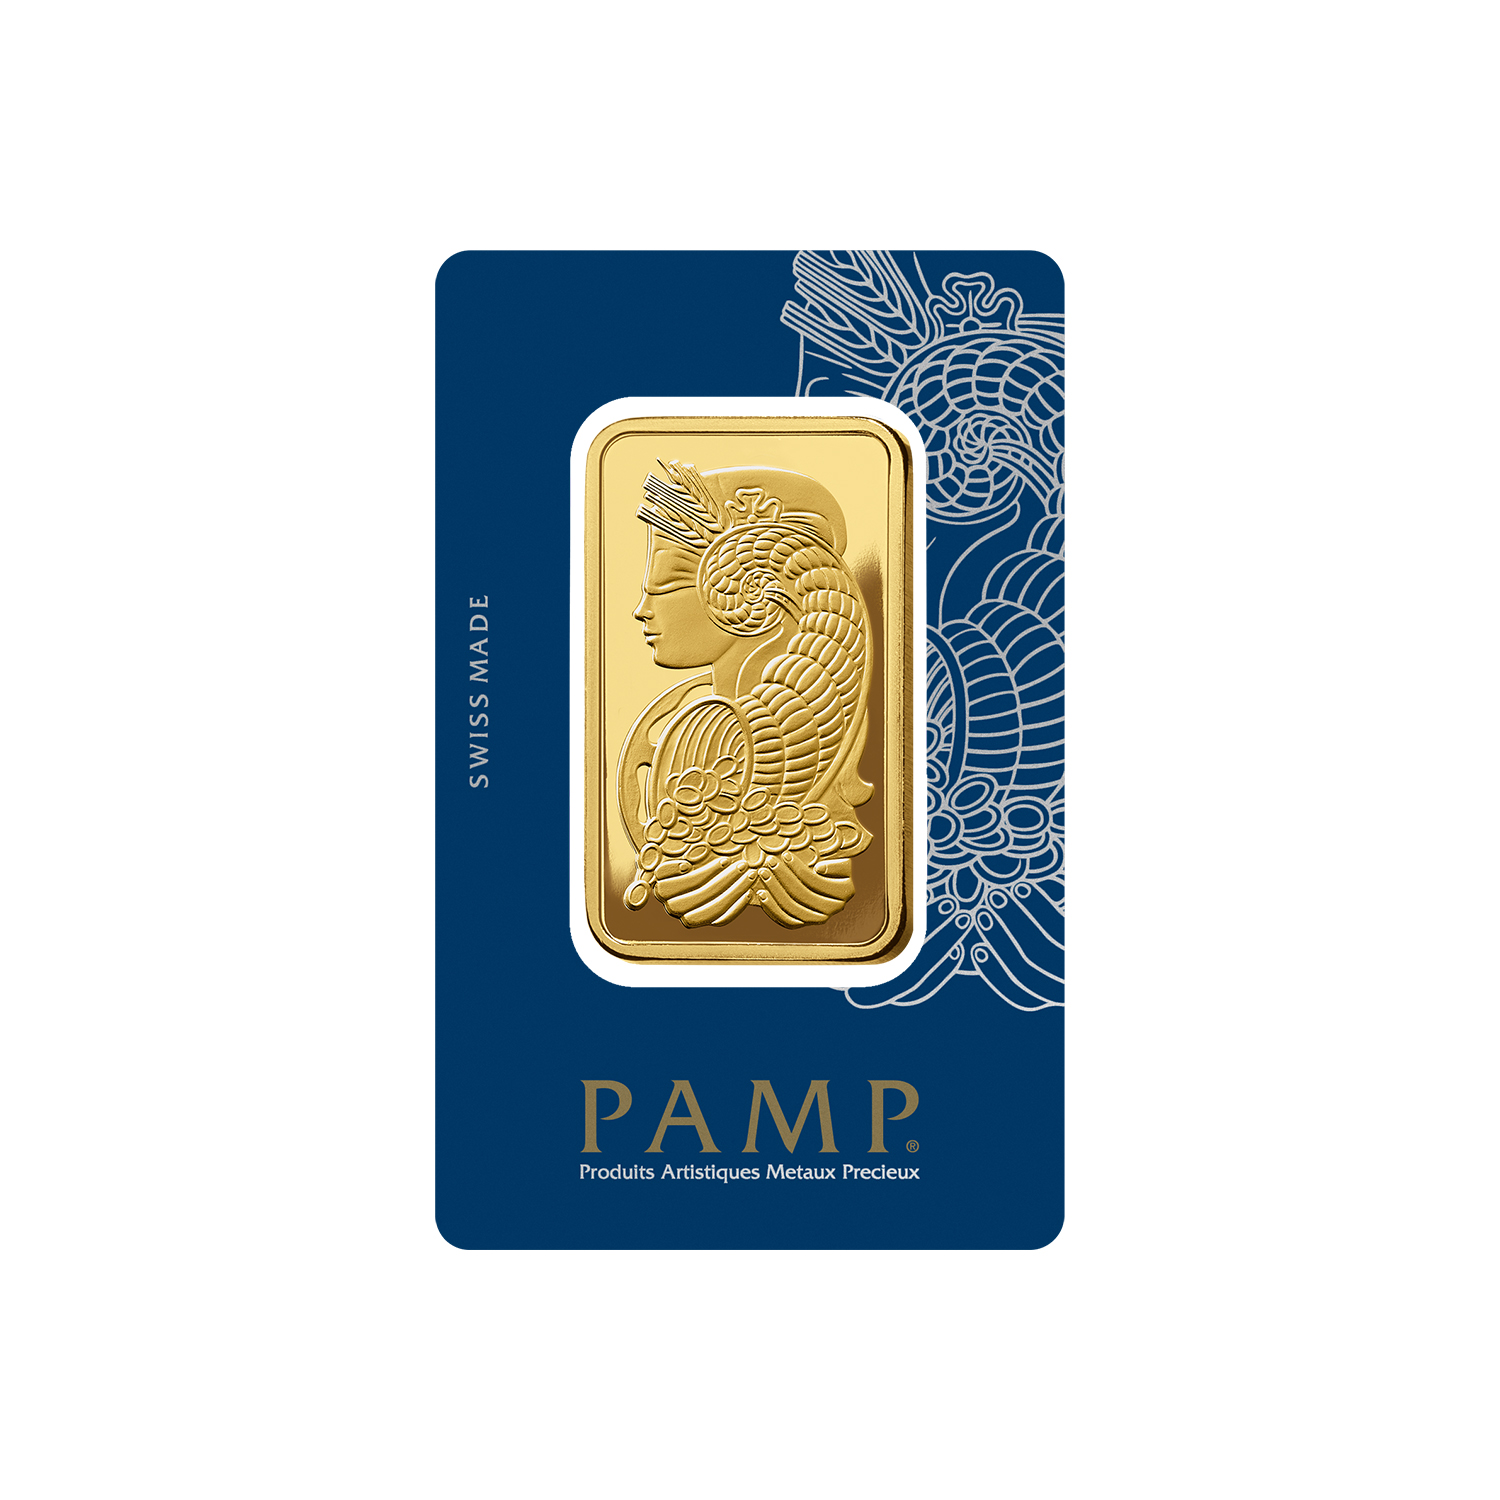 [100Gram] PAMP Fortuna Gold Minted Bar